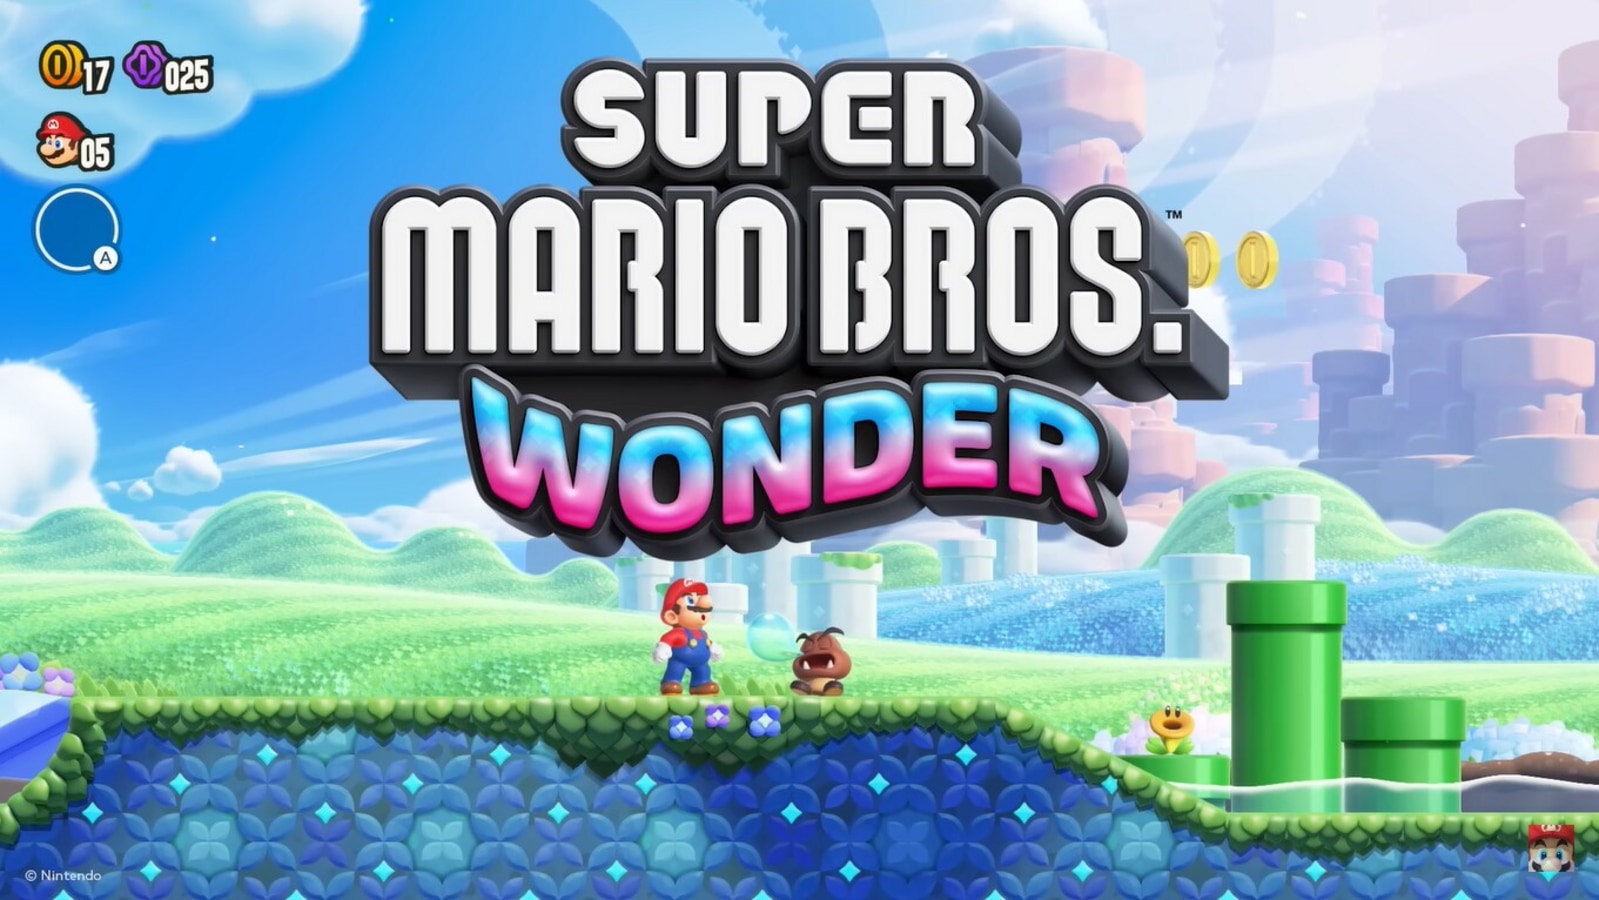 Super Mario Bros. Wonder - Plugged In